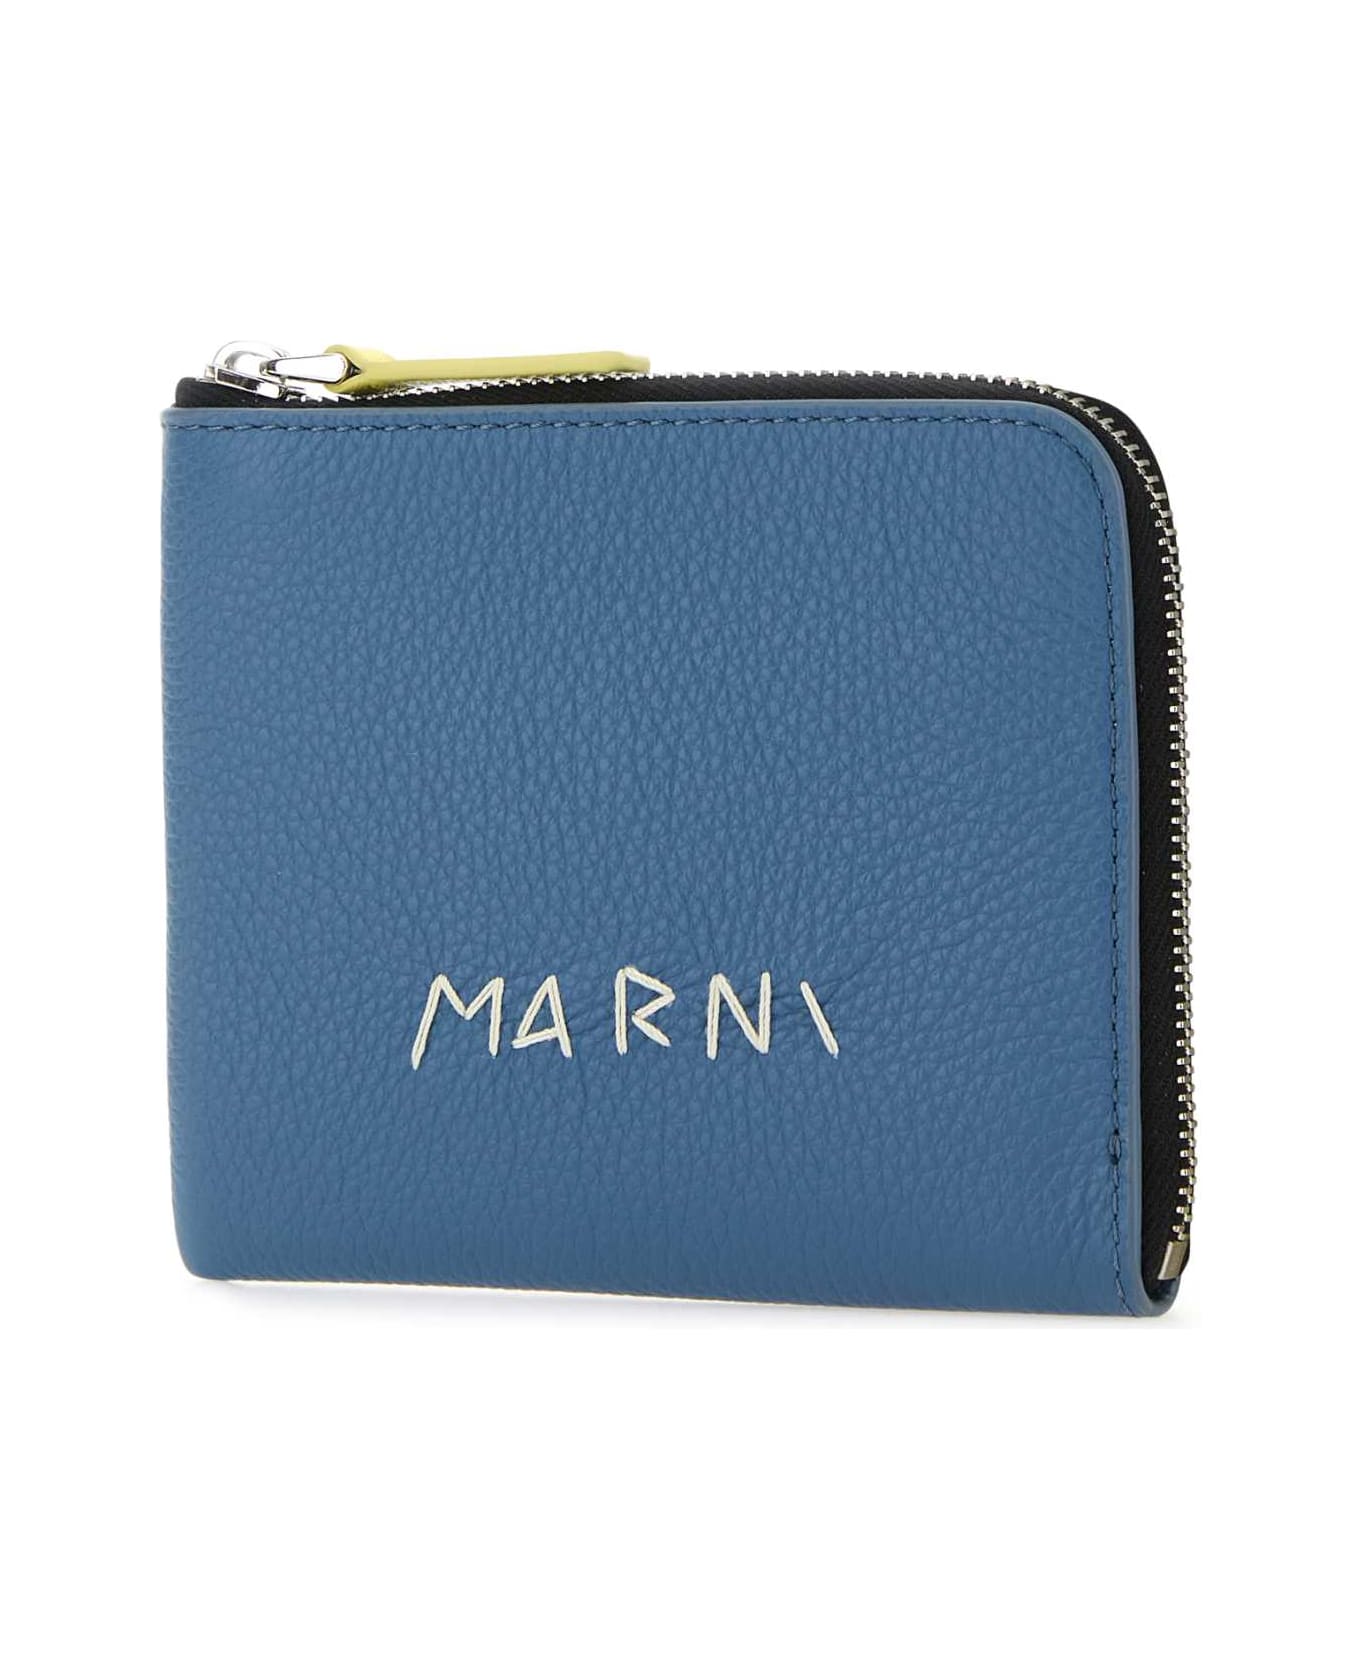 Marni Slate Blue Leather Wallet - OPAL